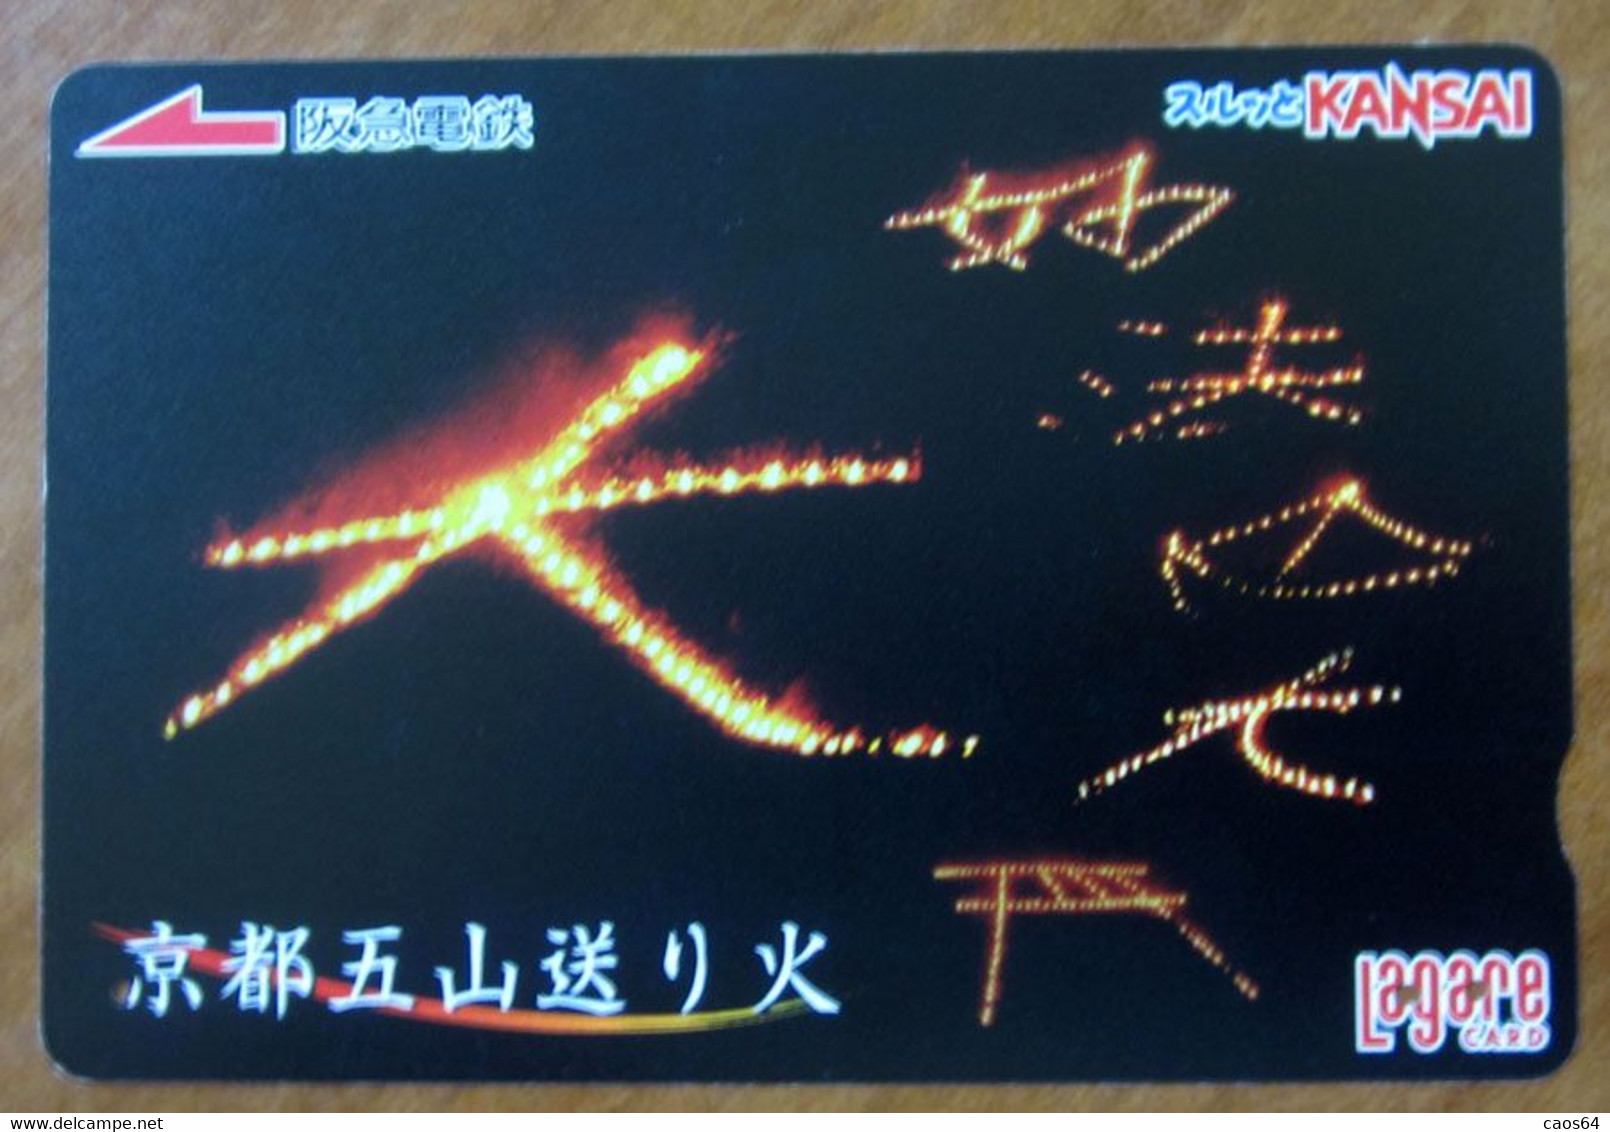 GIAPPONE Ticket Biglietto Alfabeto Lettere - Kansai Railway  Card 1.000 ¥ - Usato - World